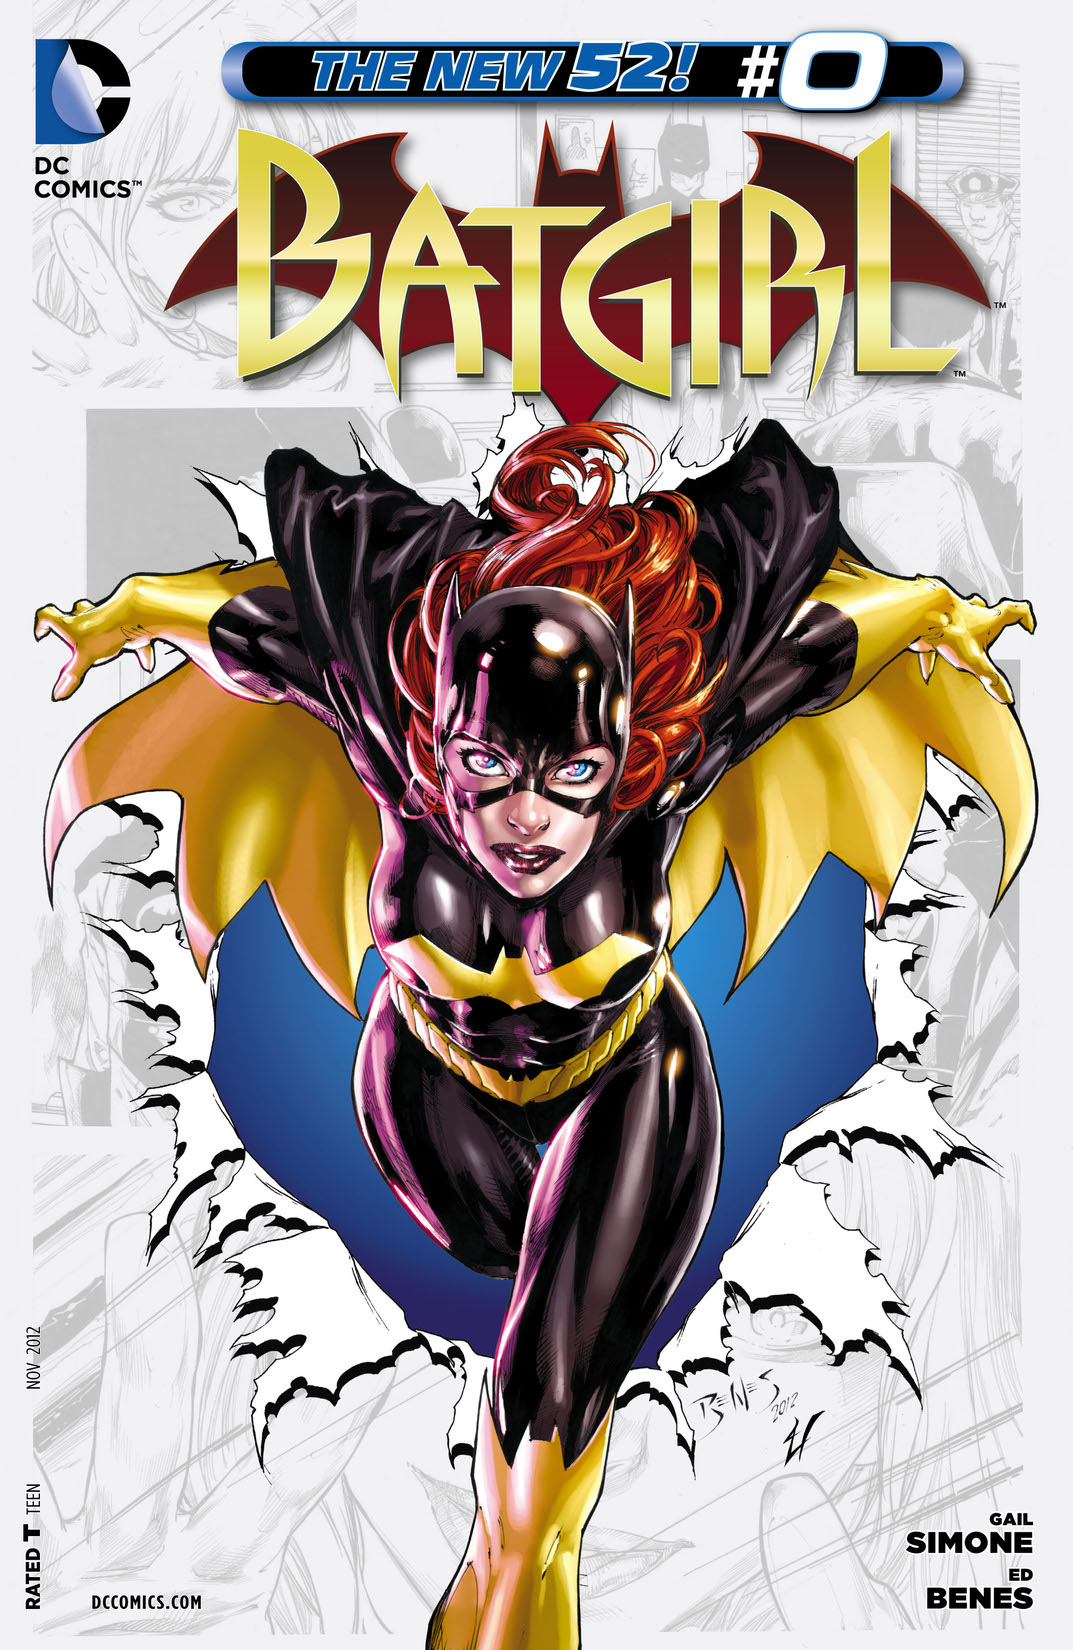 Batgirl (2011-) #0 preview images